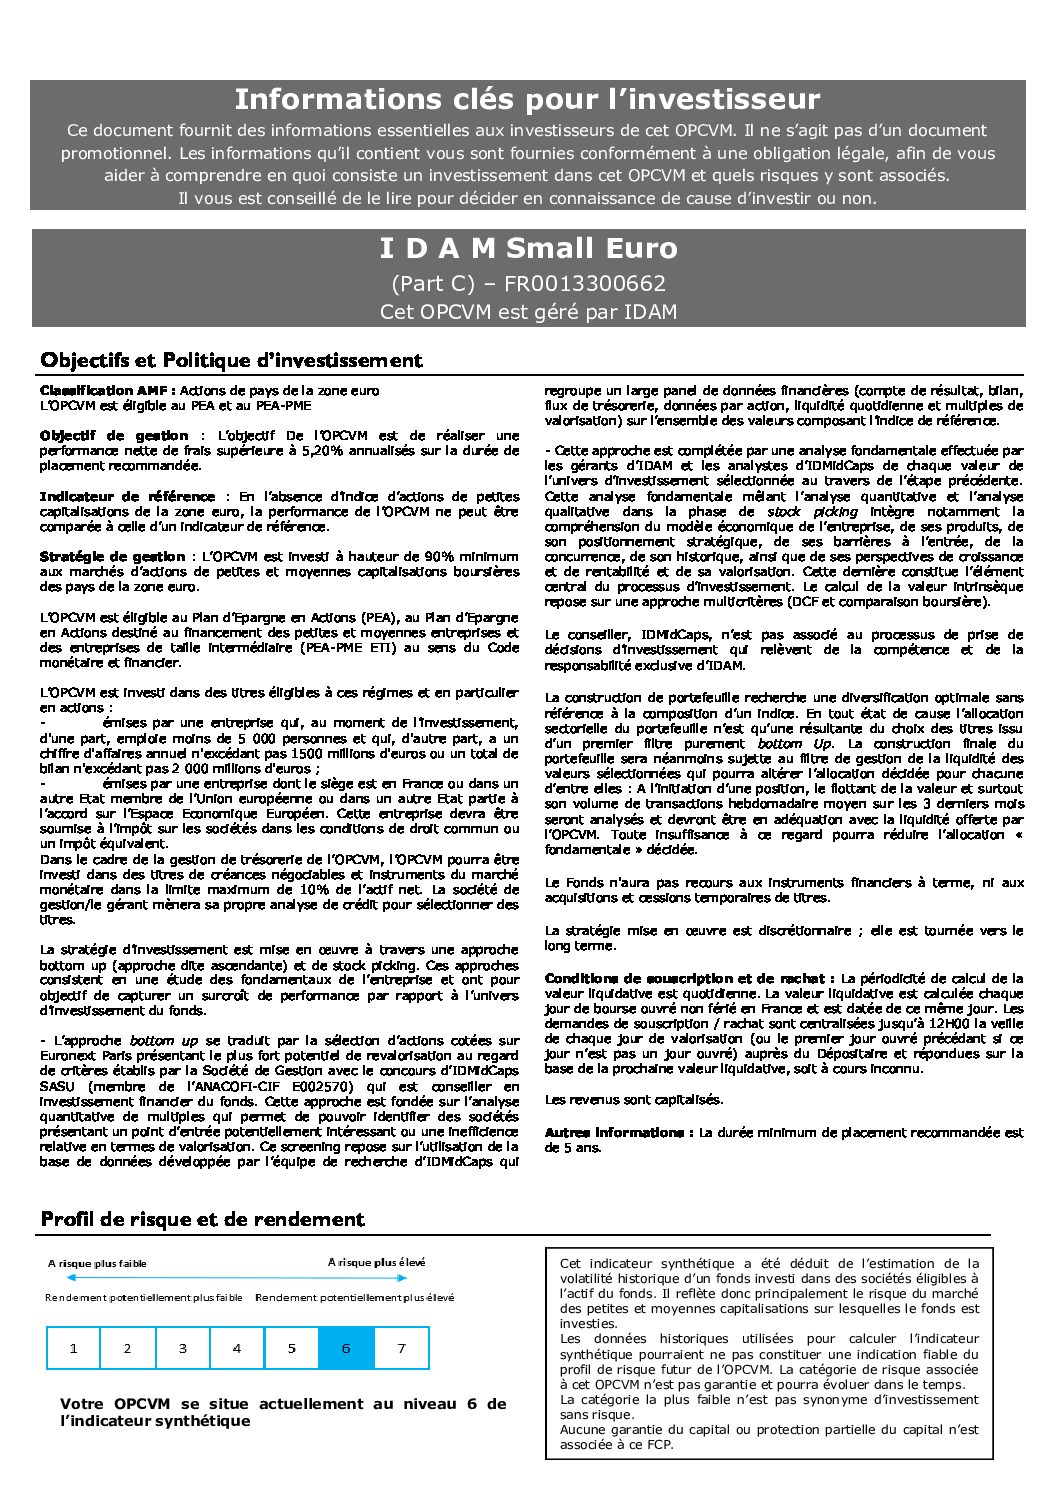 DICI-Part-C-IDAM-SMALL-EURO-2-pdf